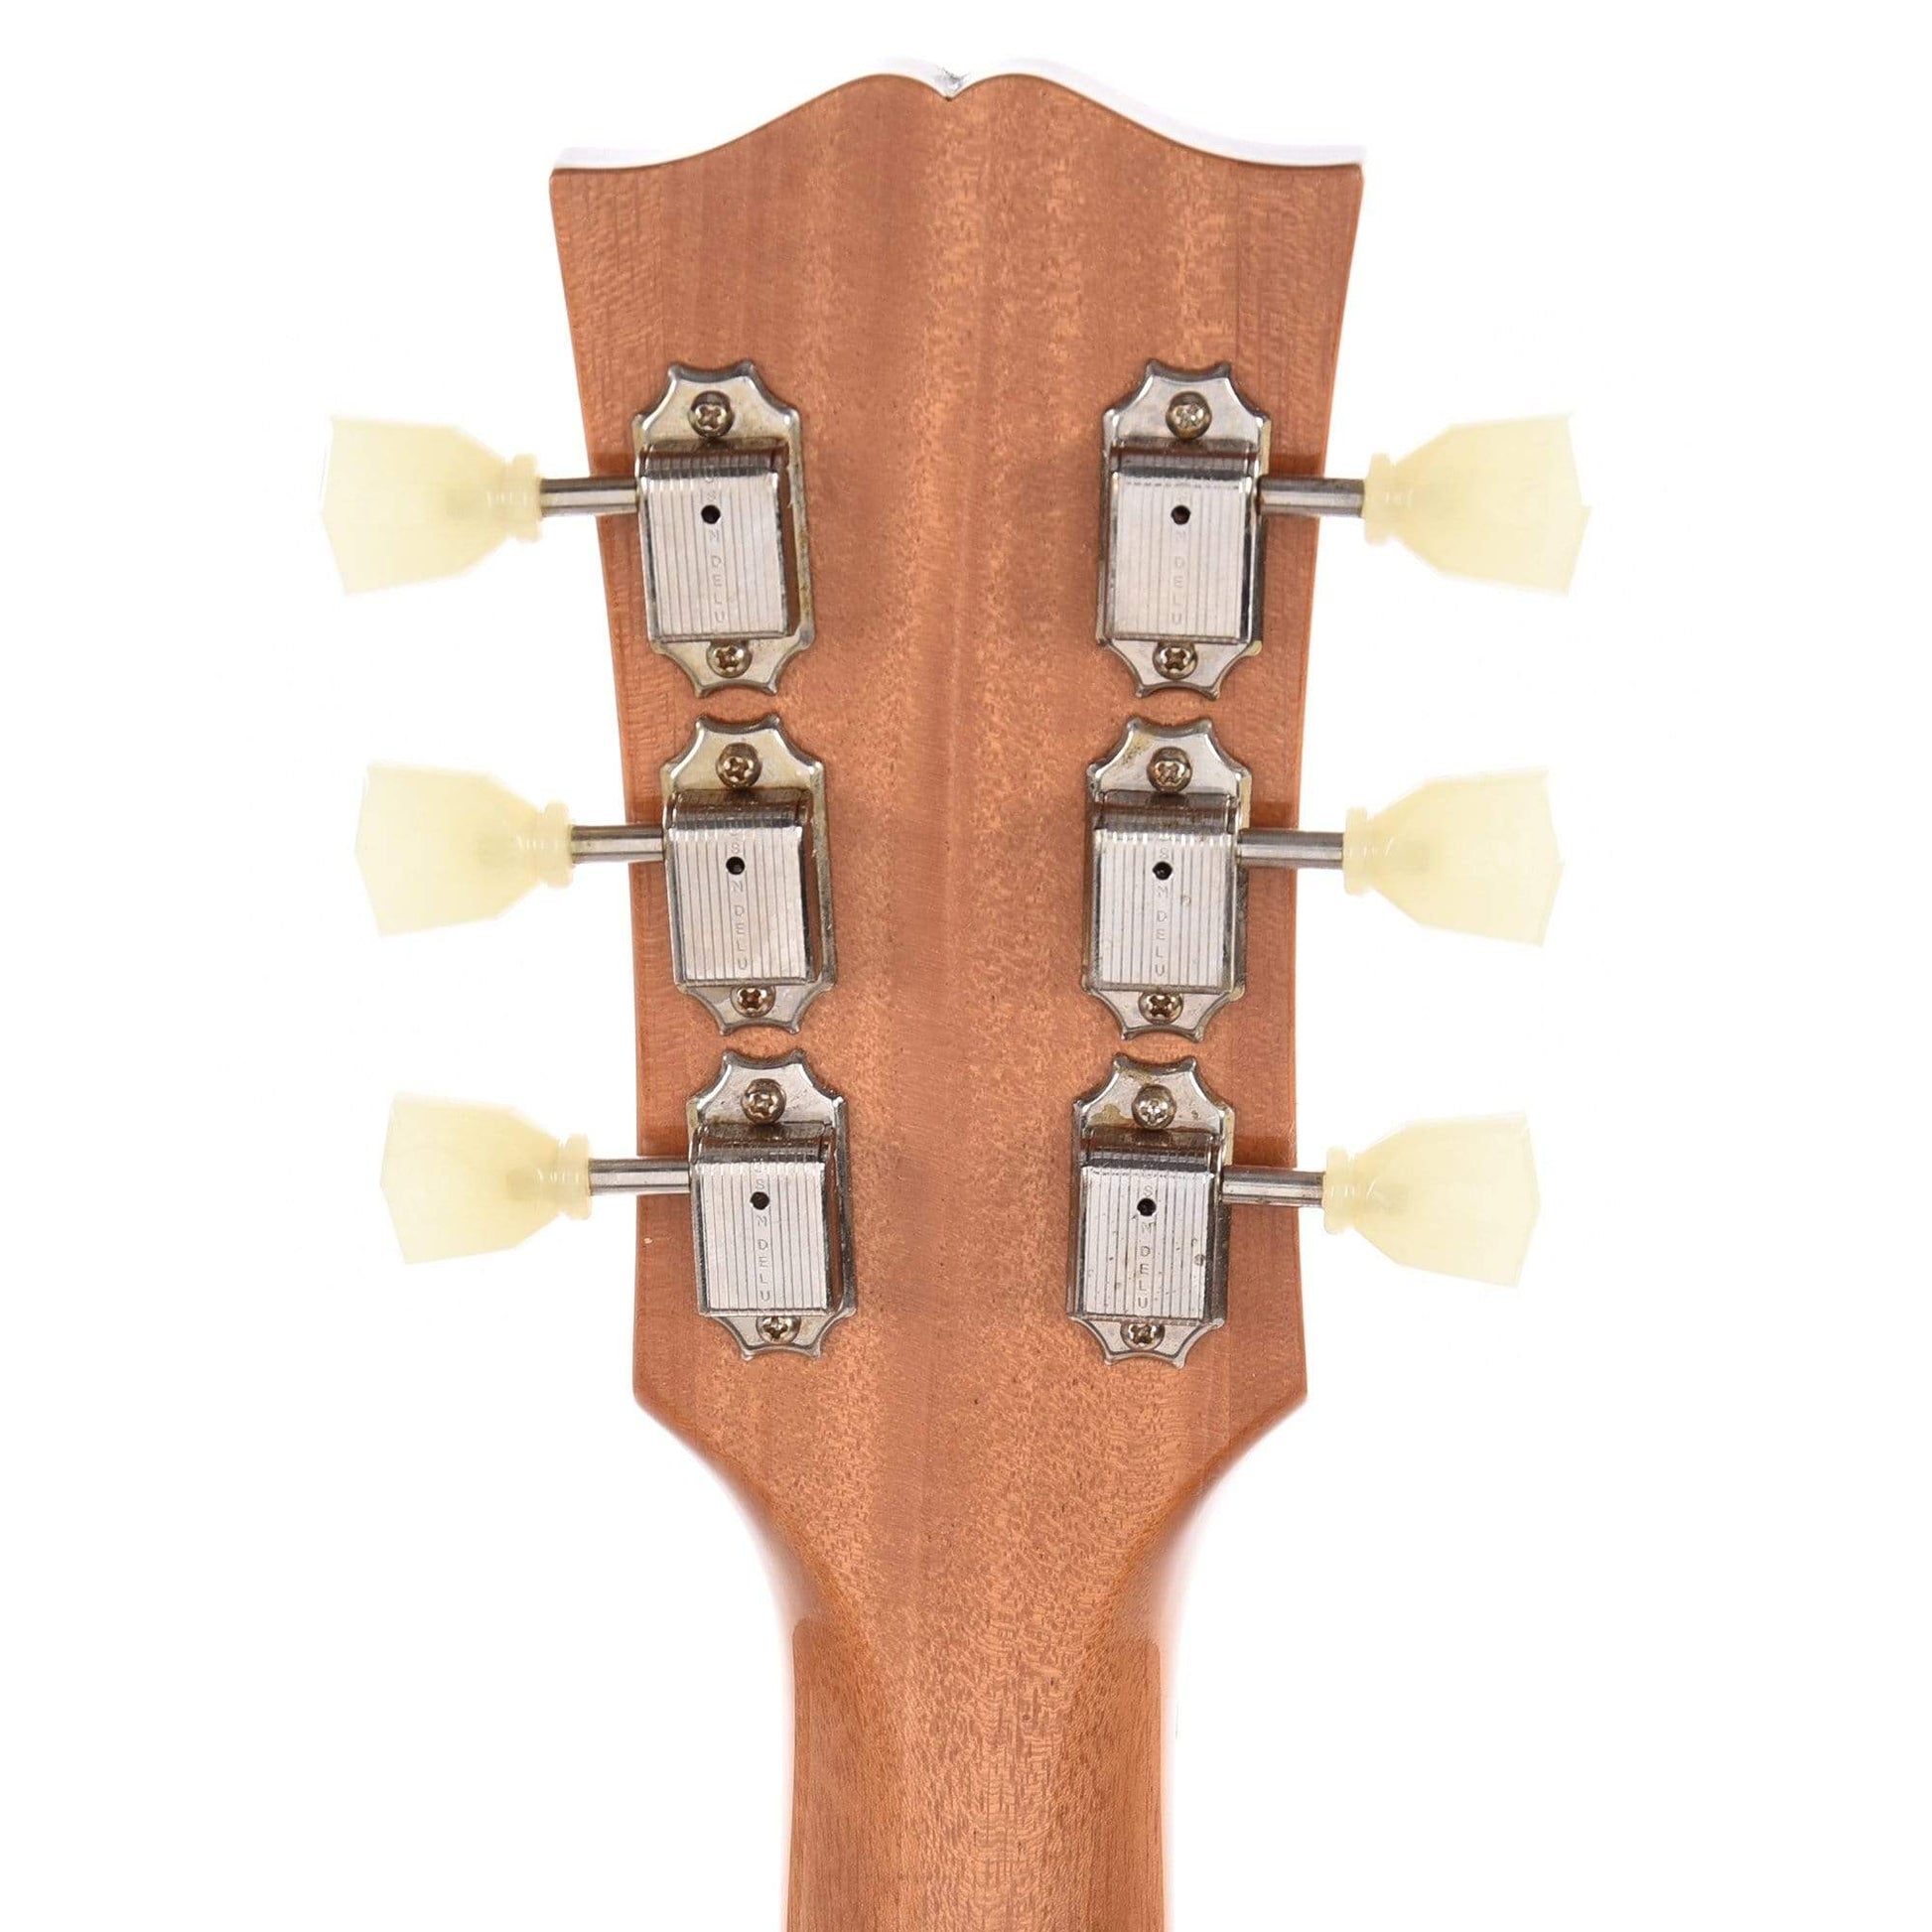 Gibson Custom 1959 ES-335 Reissue Vintage Natural VOS Electric Guitars / Semi-Hollow